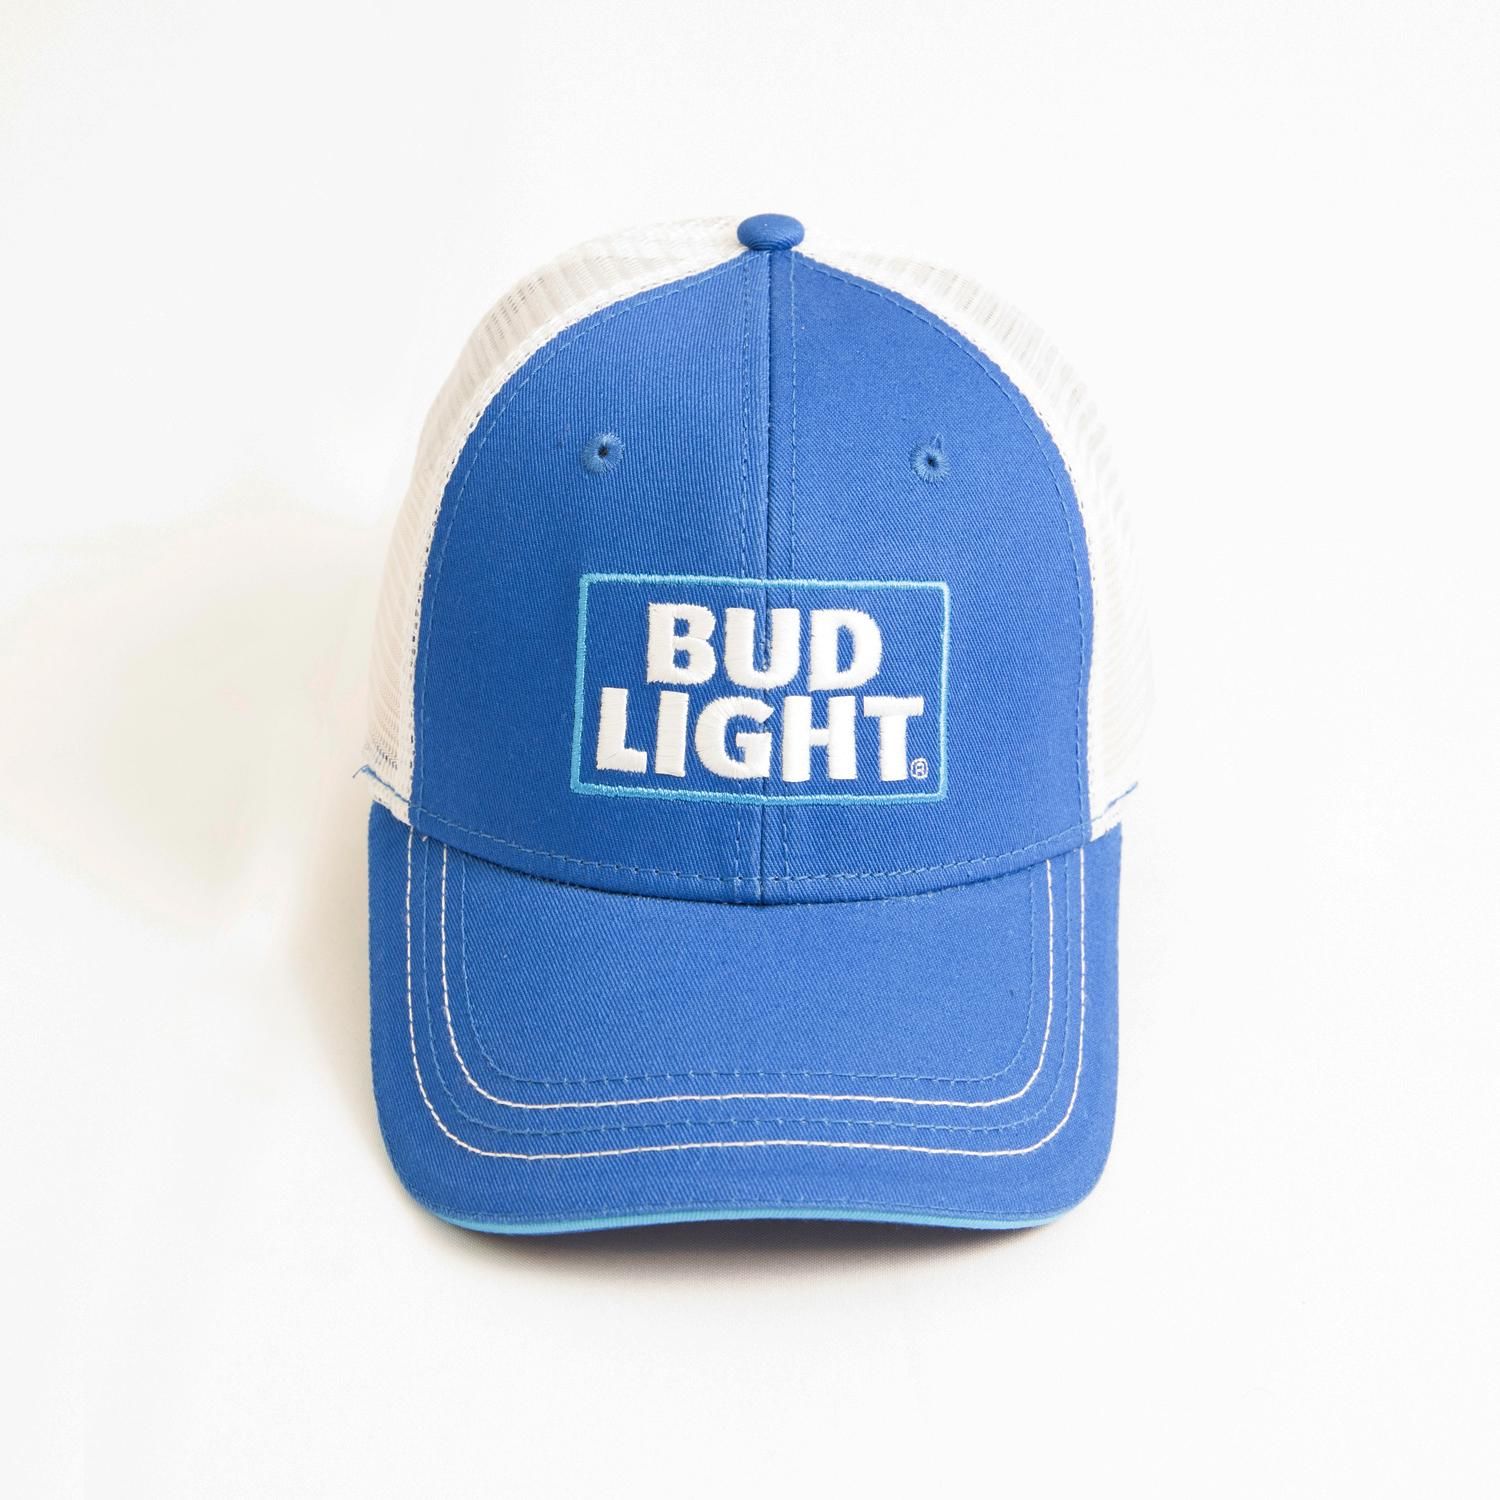 light cap